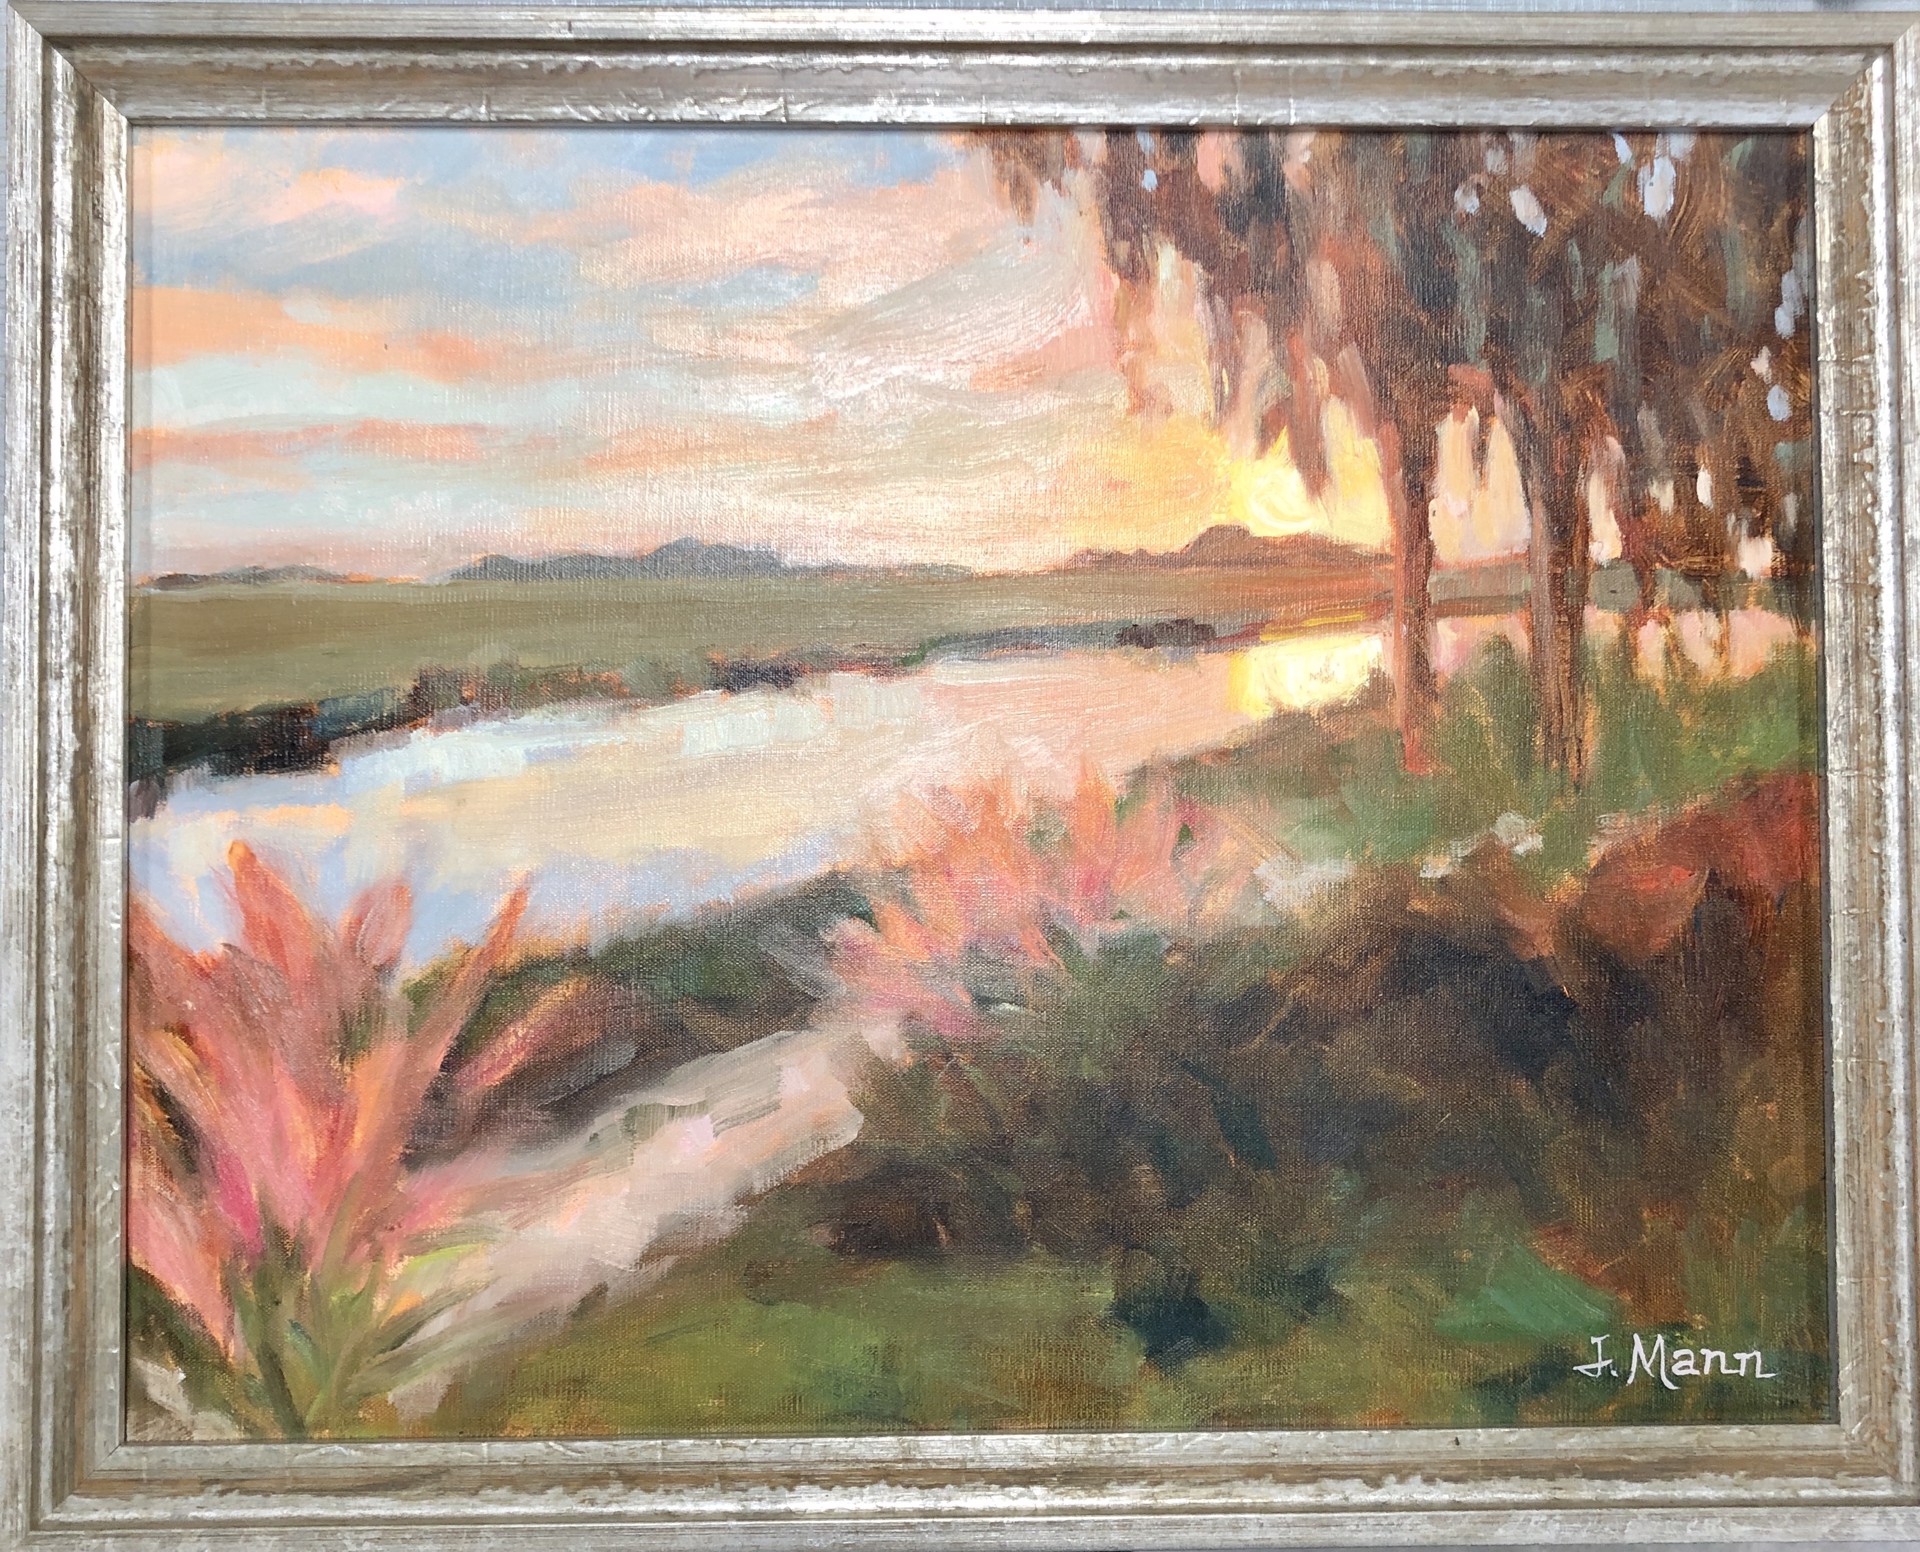 Marsh at Sundown by Julie Mann